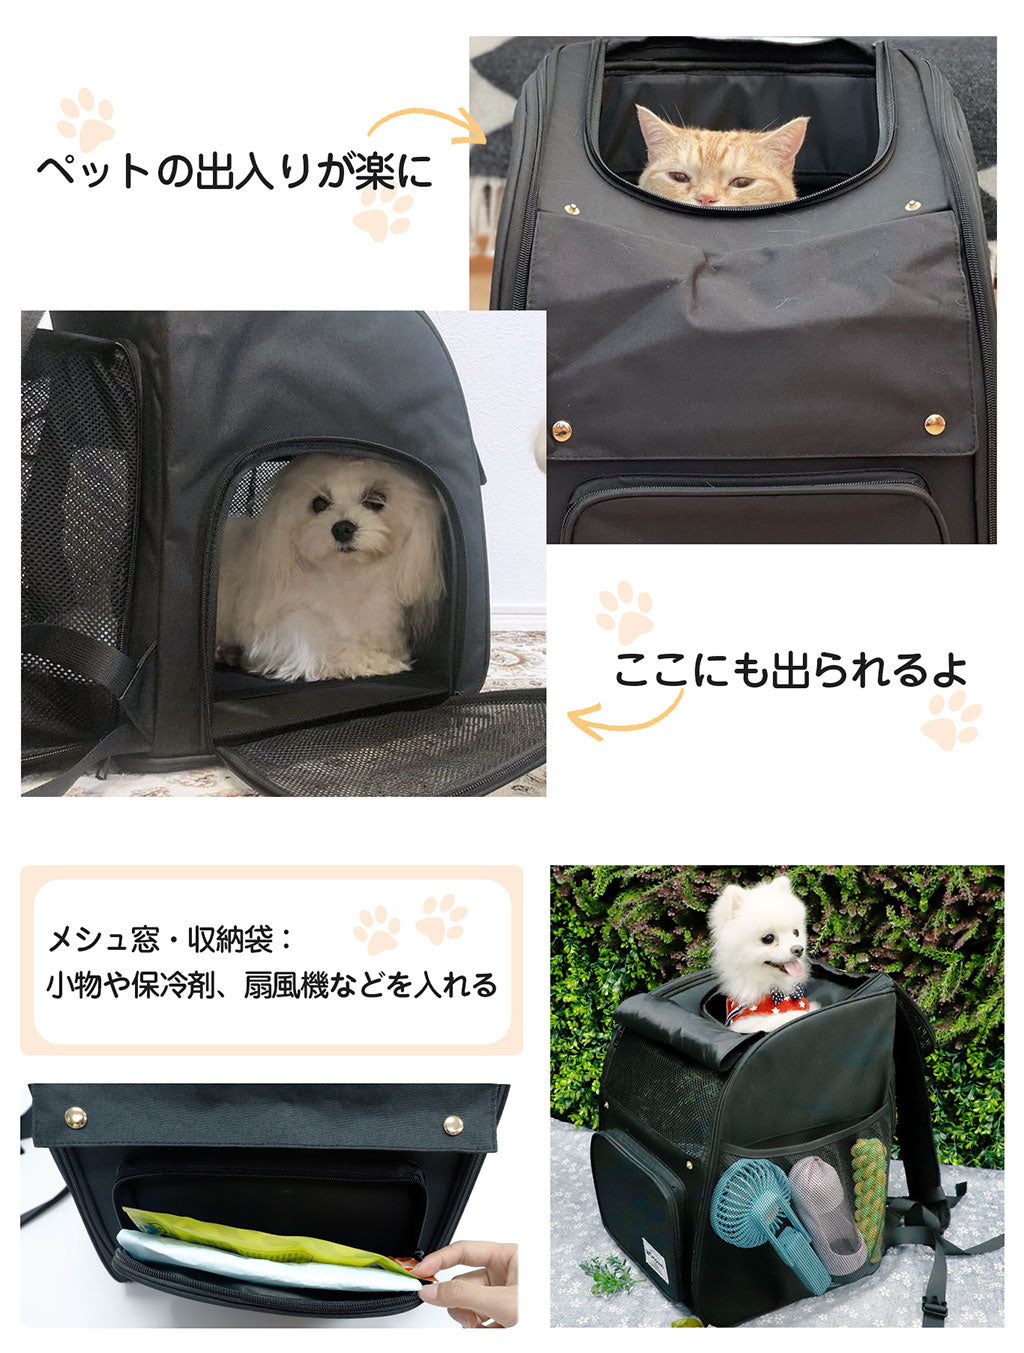 WinSun 犬リュック 犬 キャリーリュック 小型犬 拡張可能 猫 キャリーリュック ペットキャリーリュック 大容量 通気性 ペットリュック 旅行/通院/交通機関/避難用 